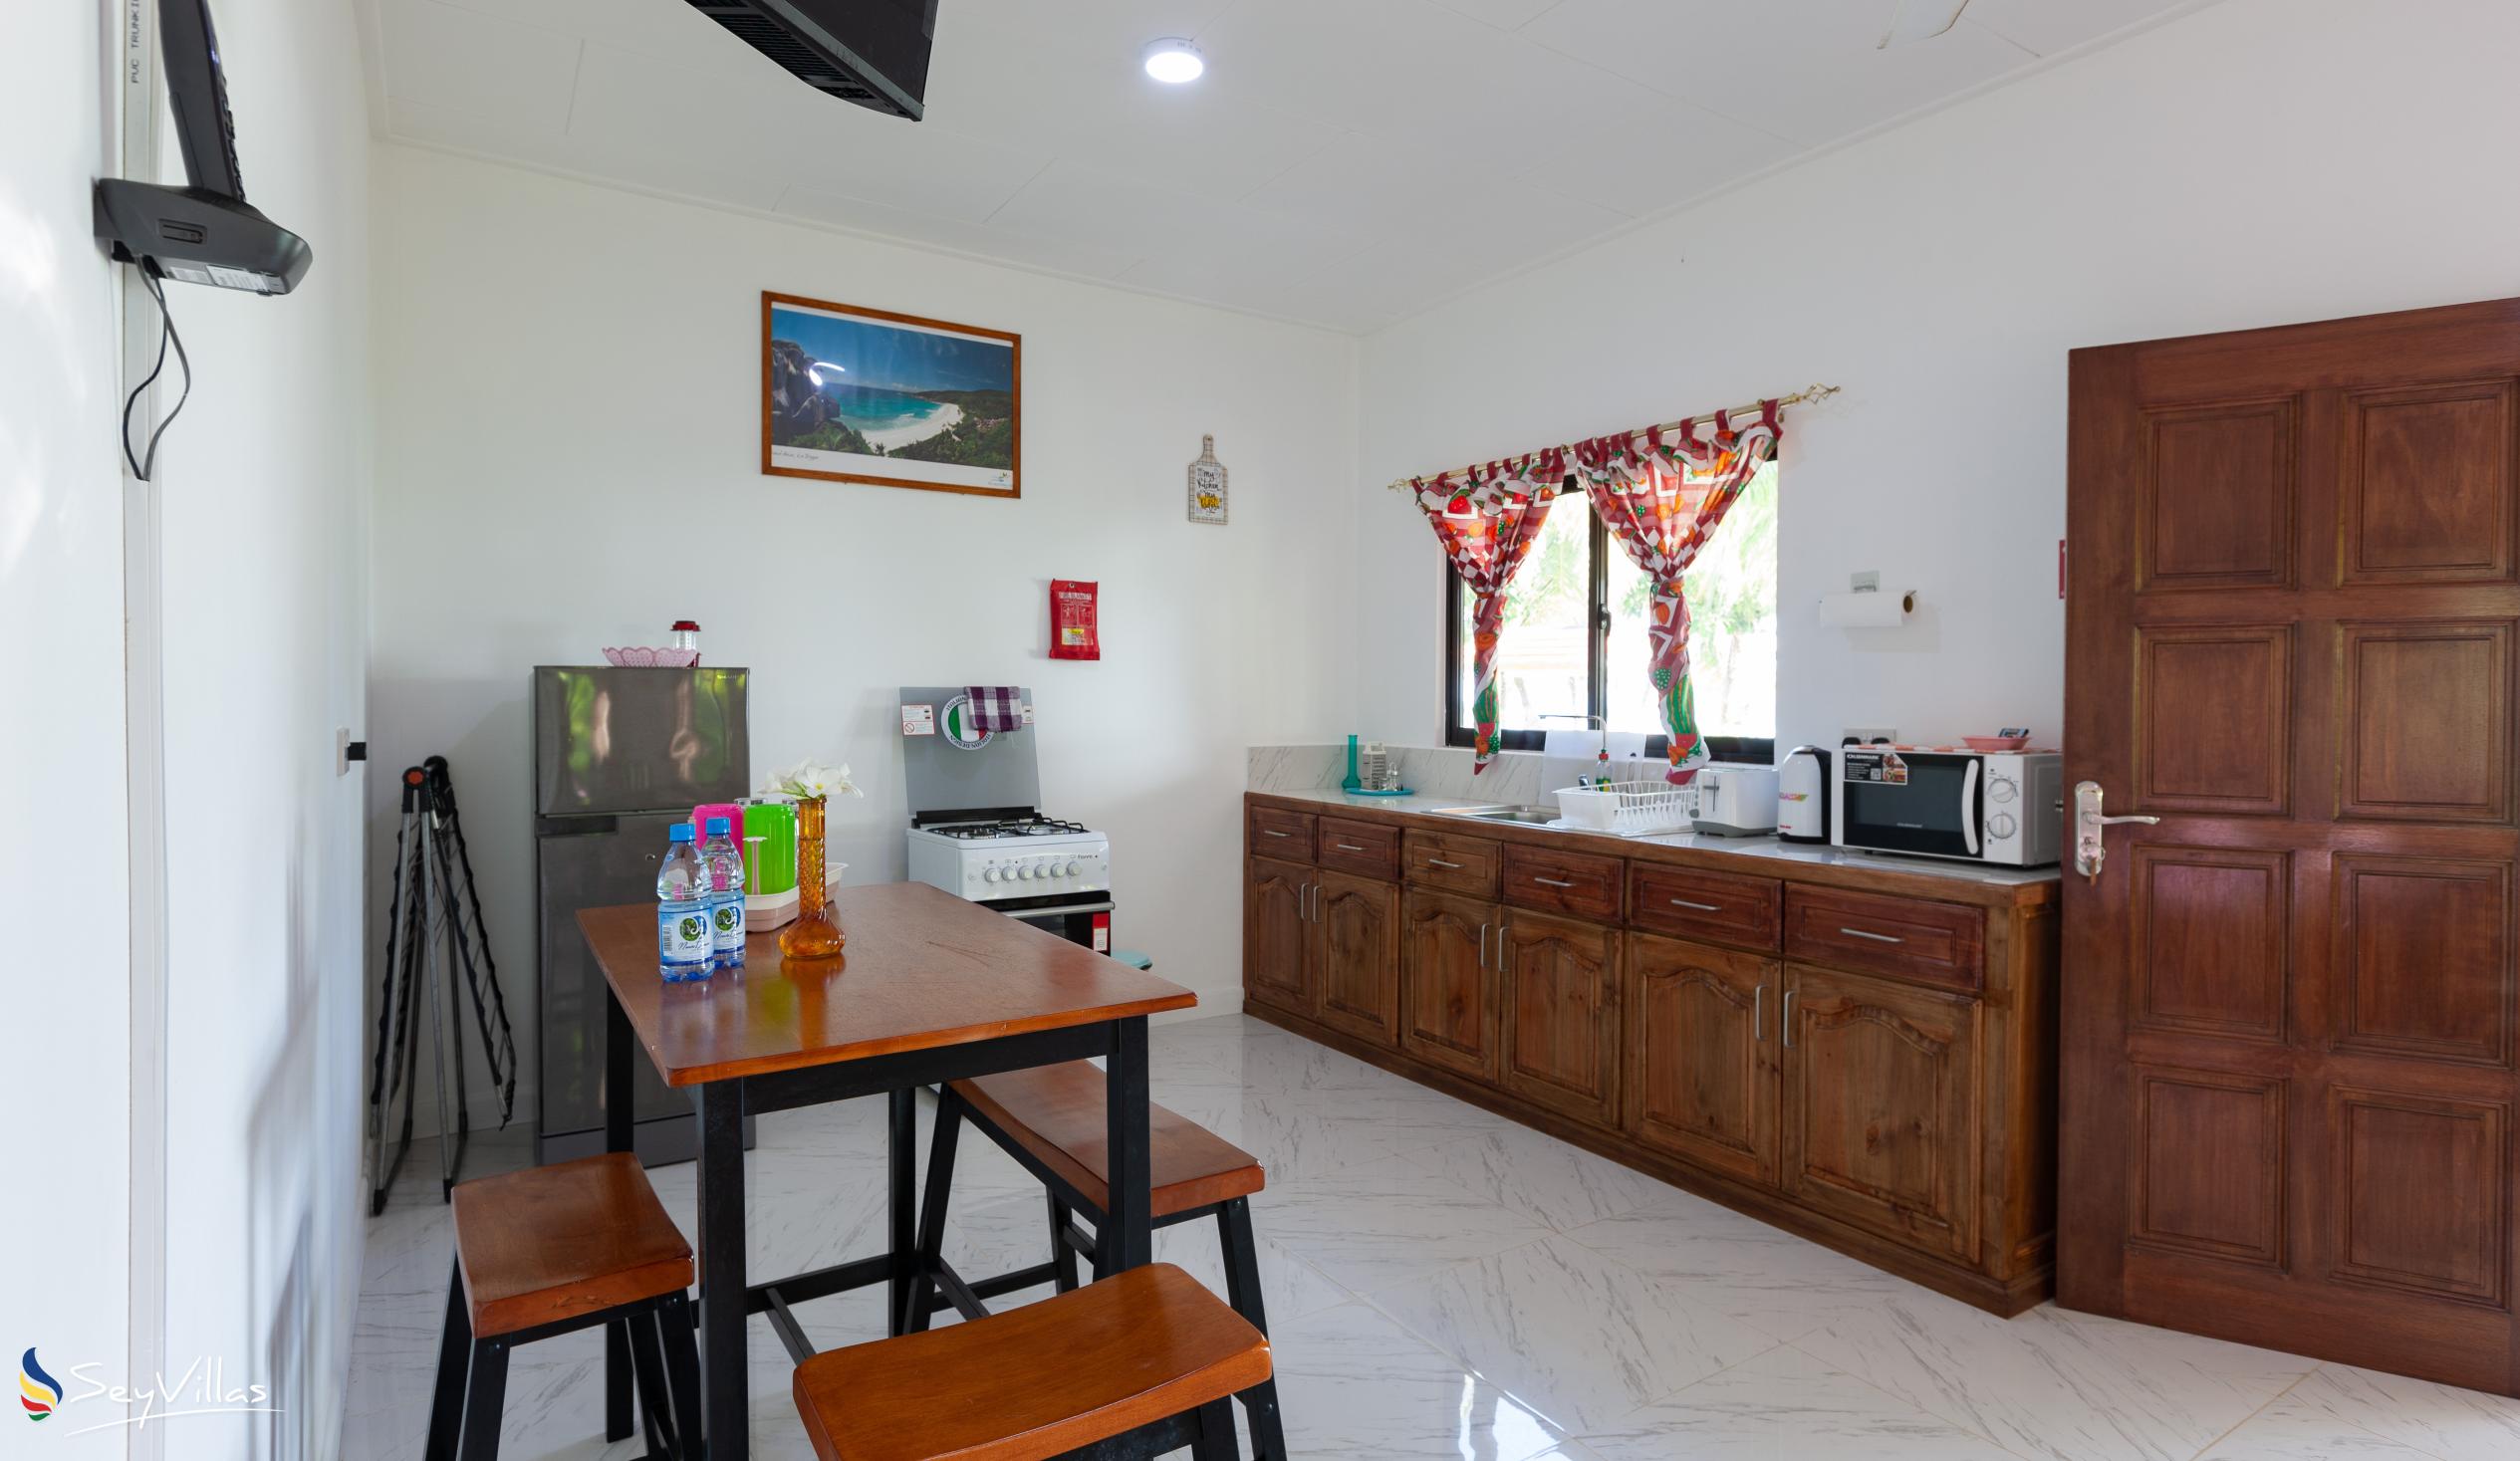 Photo 66: Anse Grosse Roche Beach Villa - 1-Bedroom Apartment - La Digue (Seychelles)